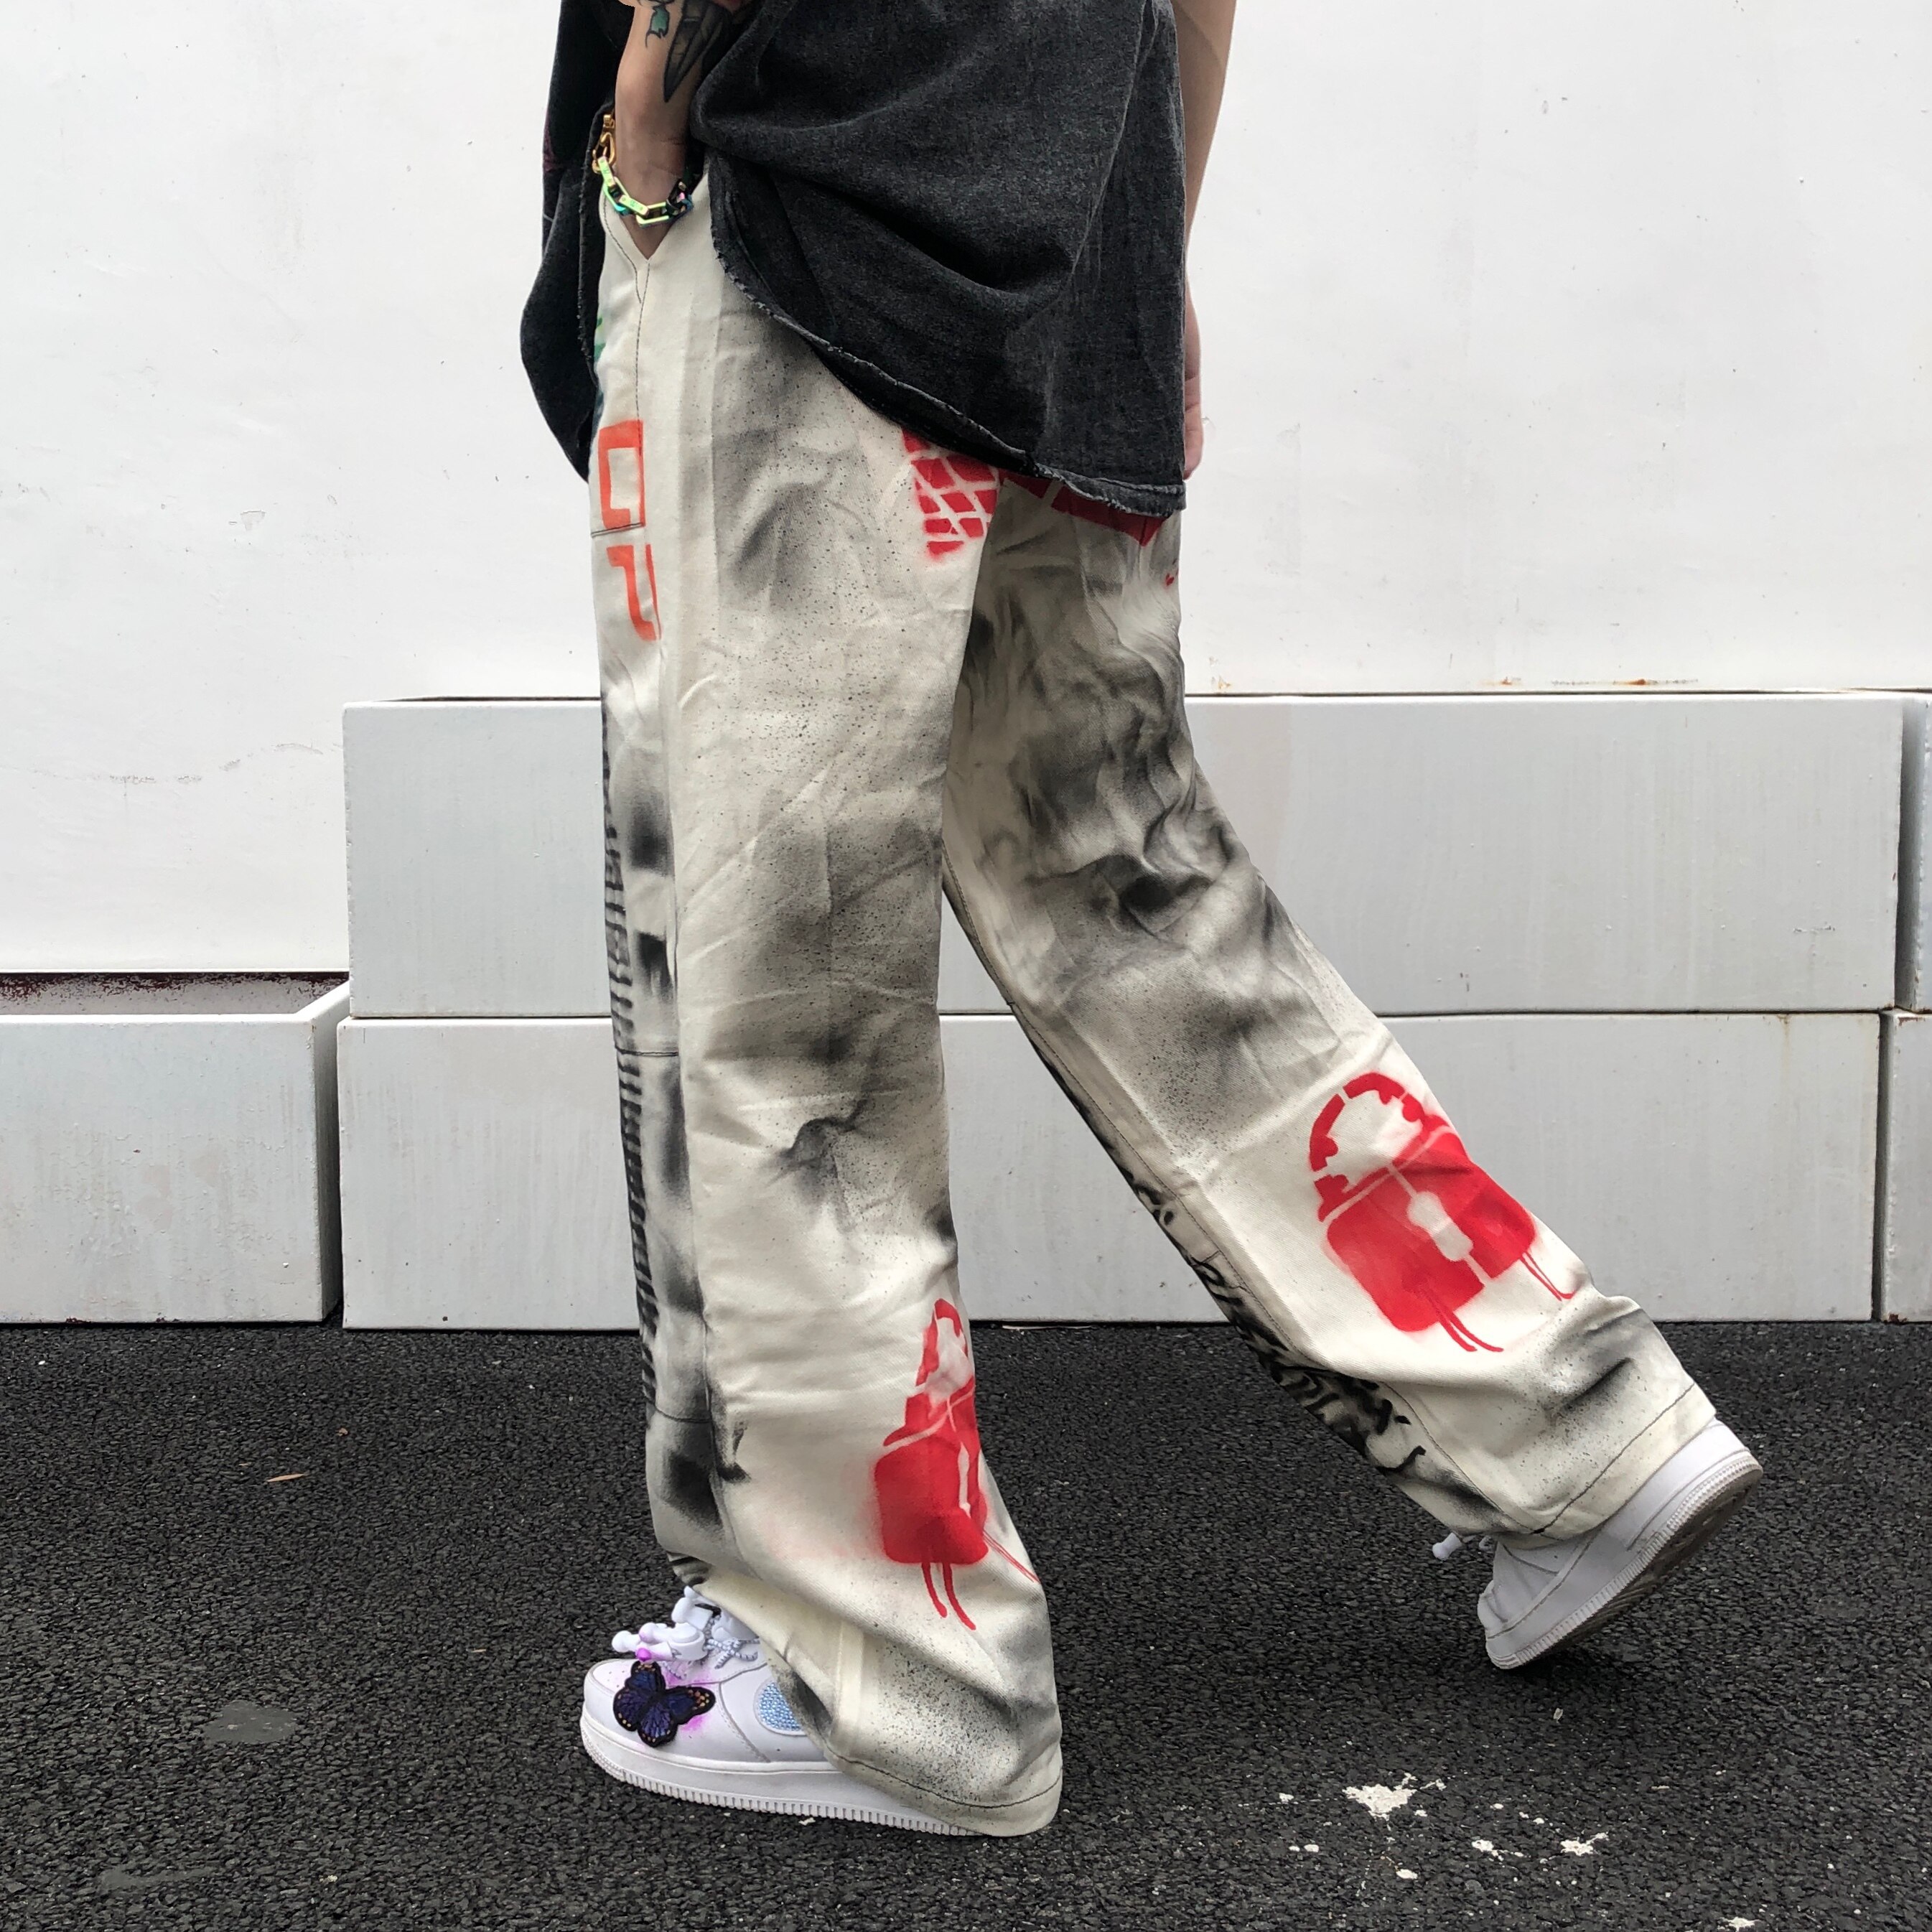 Uncledonjm streetwear mænd løs denim jeans graffiti vintage denim bukser harajuku joggers bukser  t2-a021